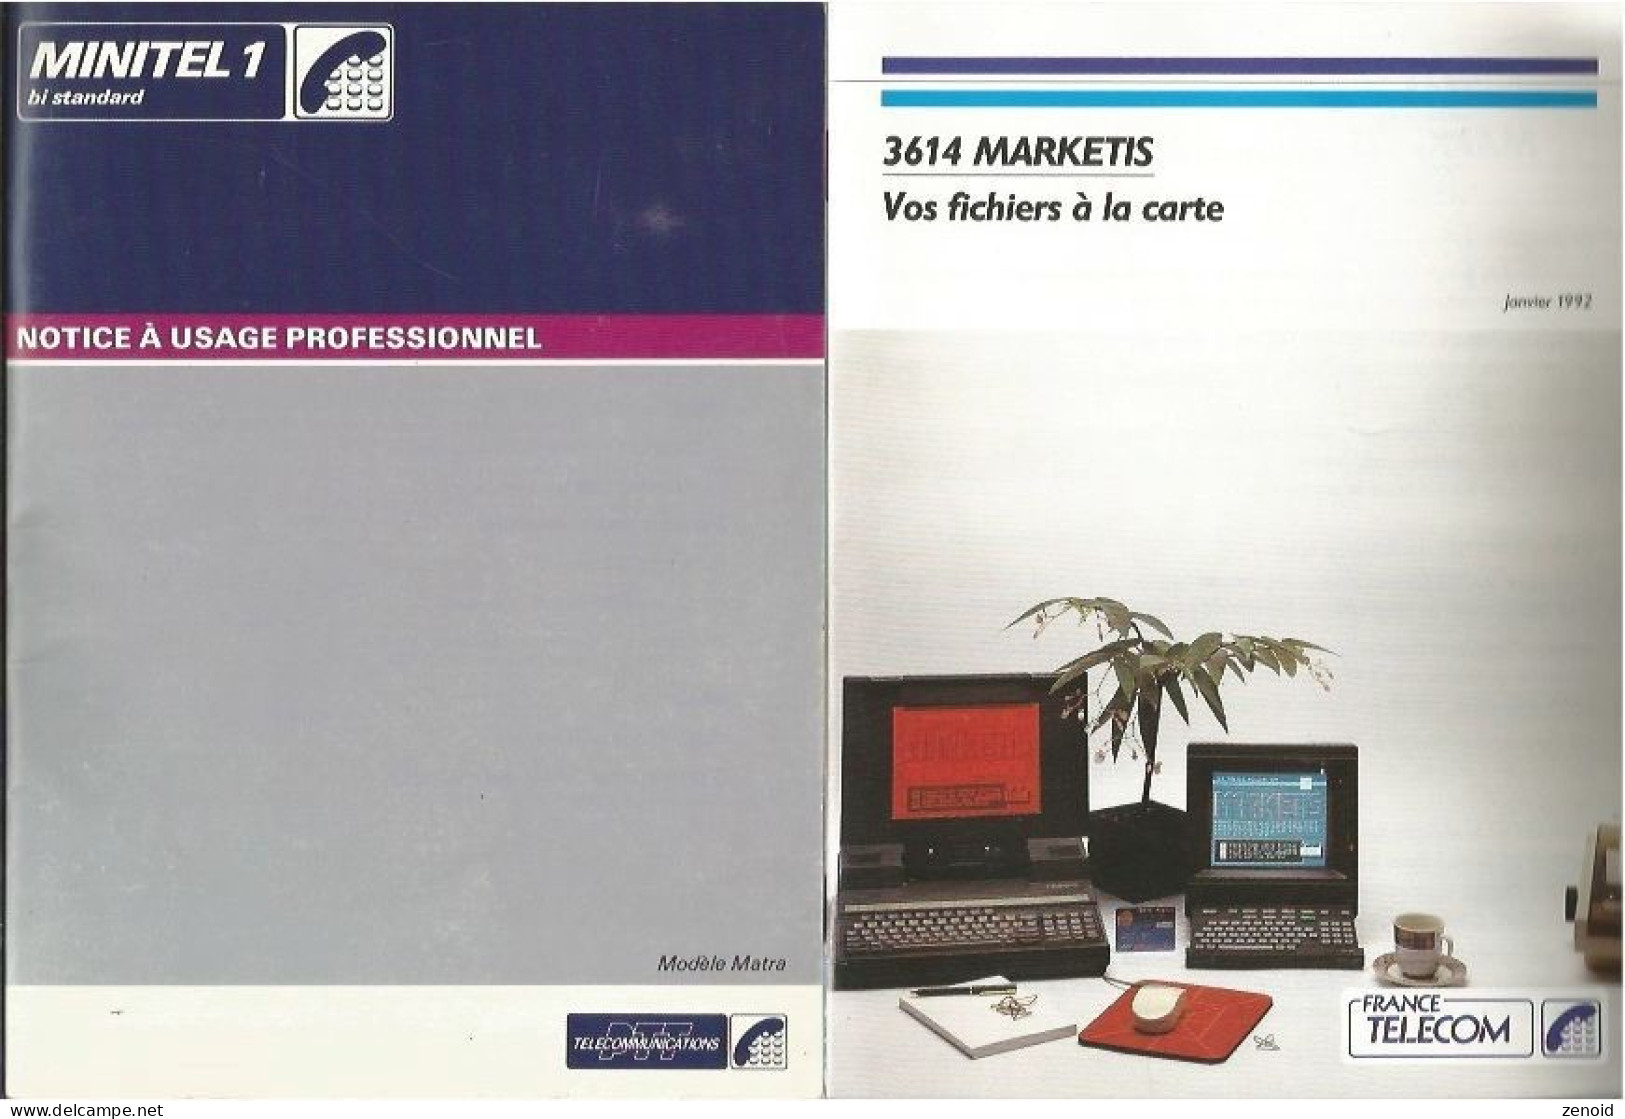 Envoi ,Les Pages Minitel 1995 + Livret "Minitel 1 - Telephony